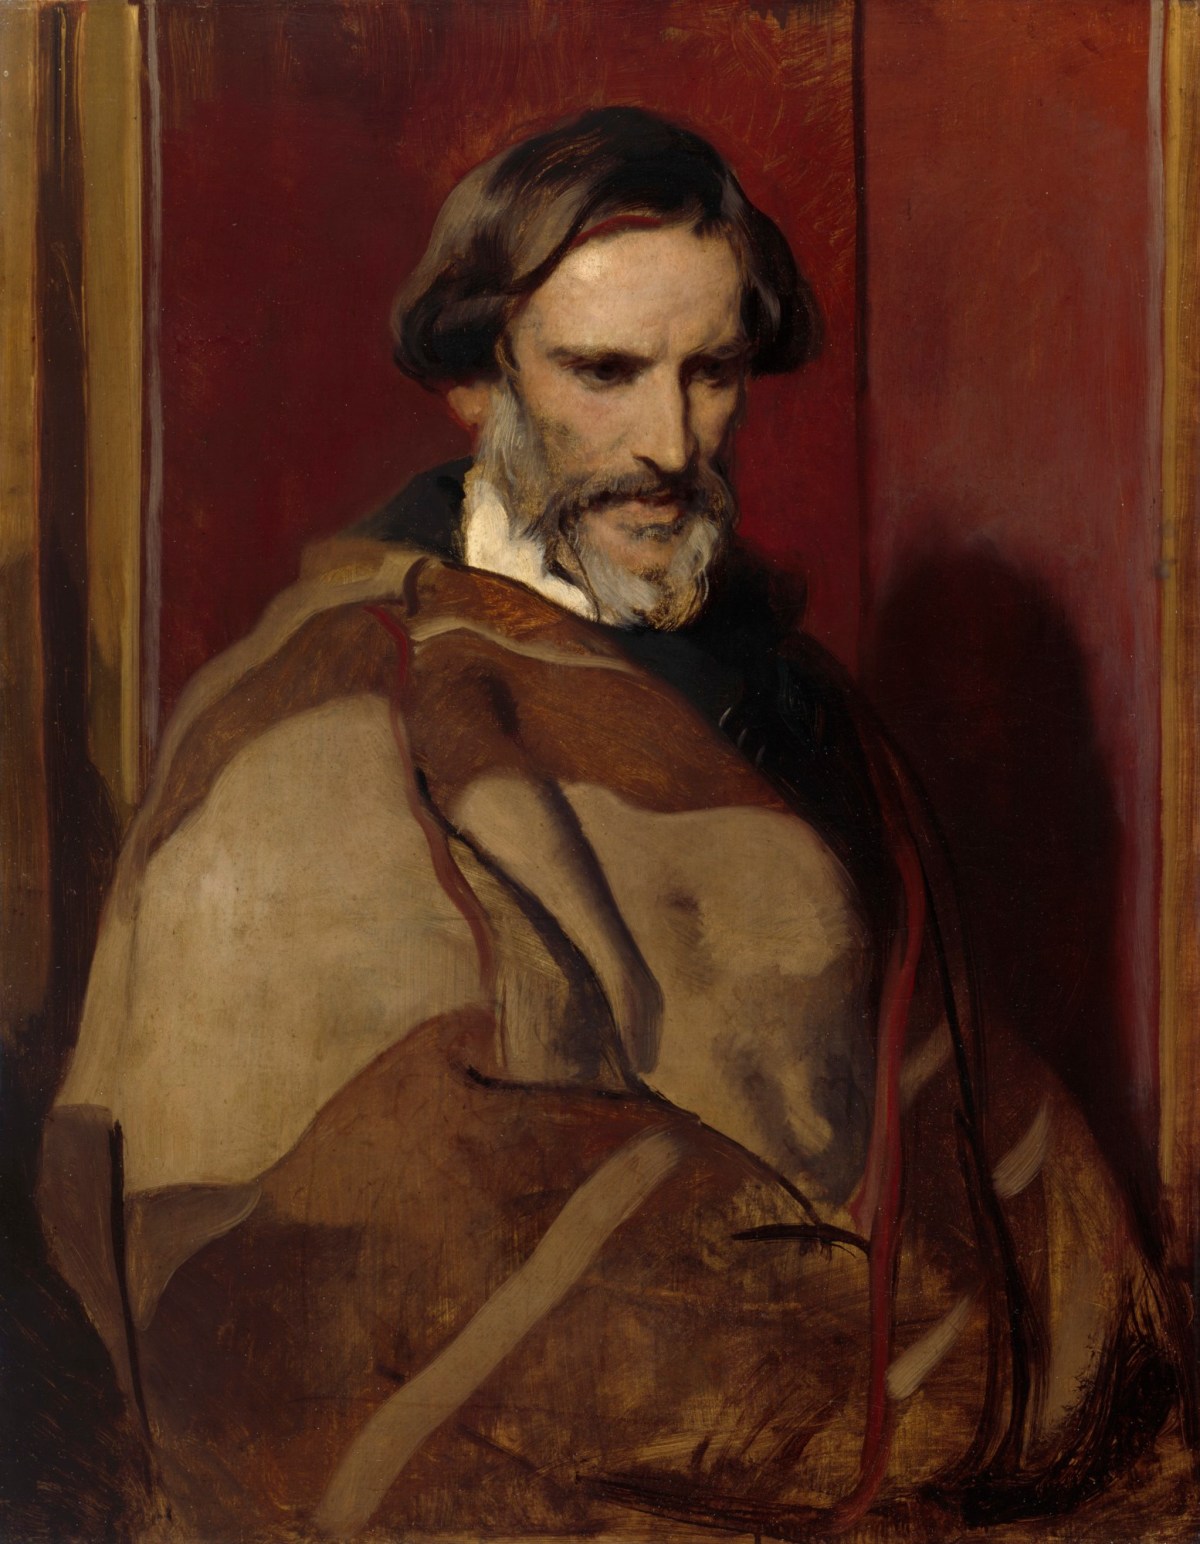 NPG Ax27700; John Gibson - Portrait - National Portrait Gallery